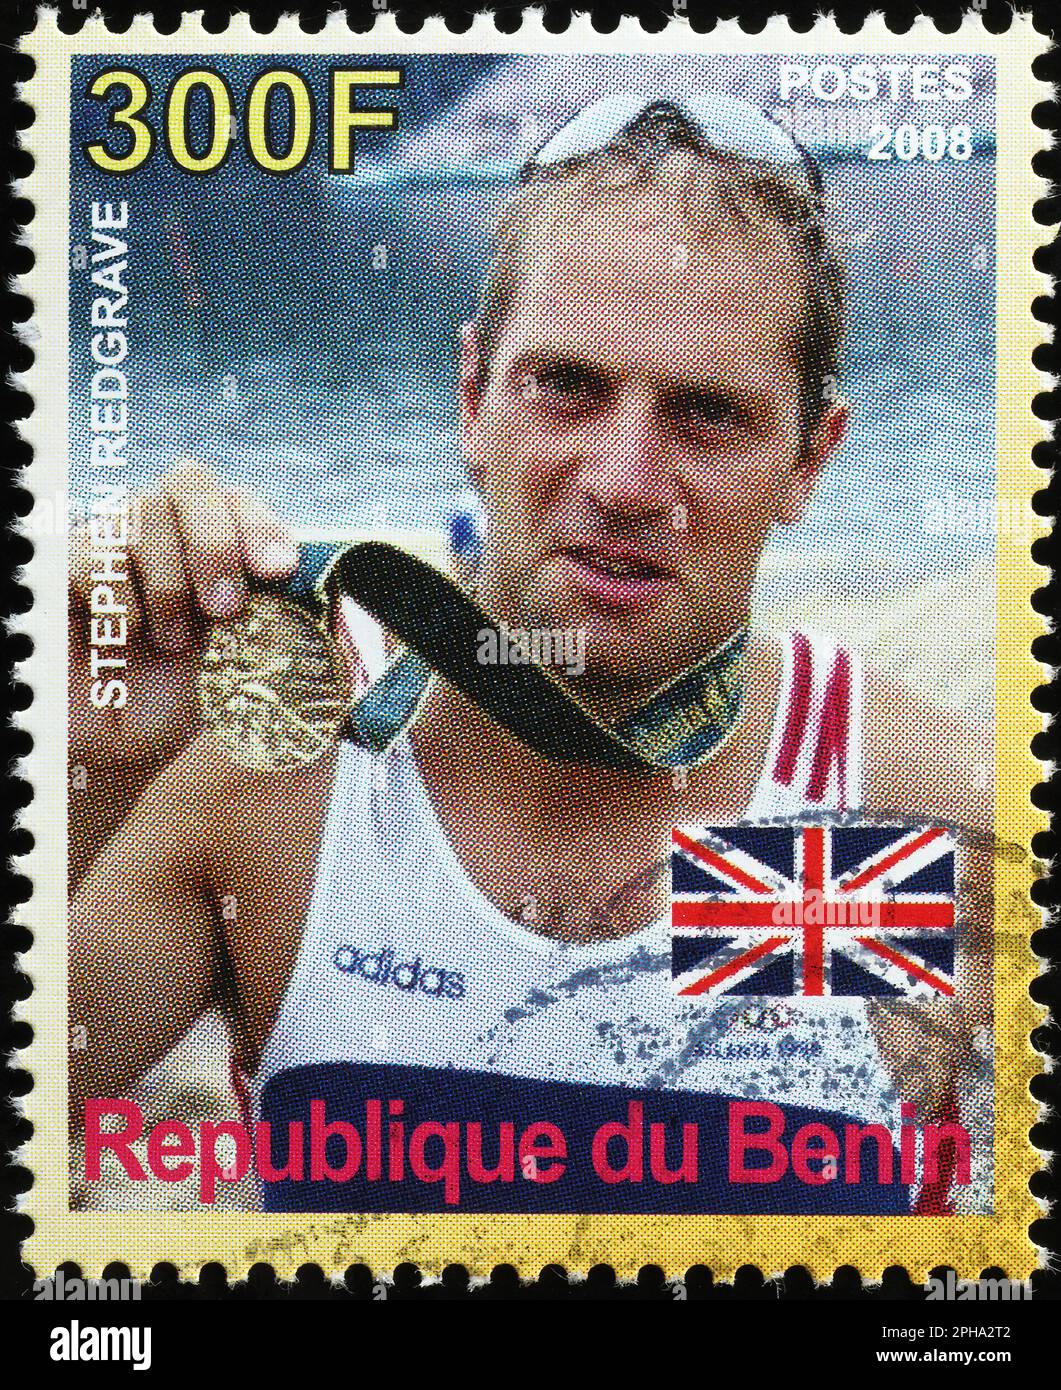 British retired rower Steve Redgrave on postage stamp Stock Photo